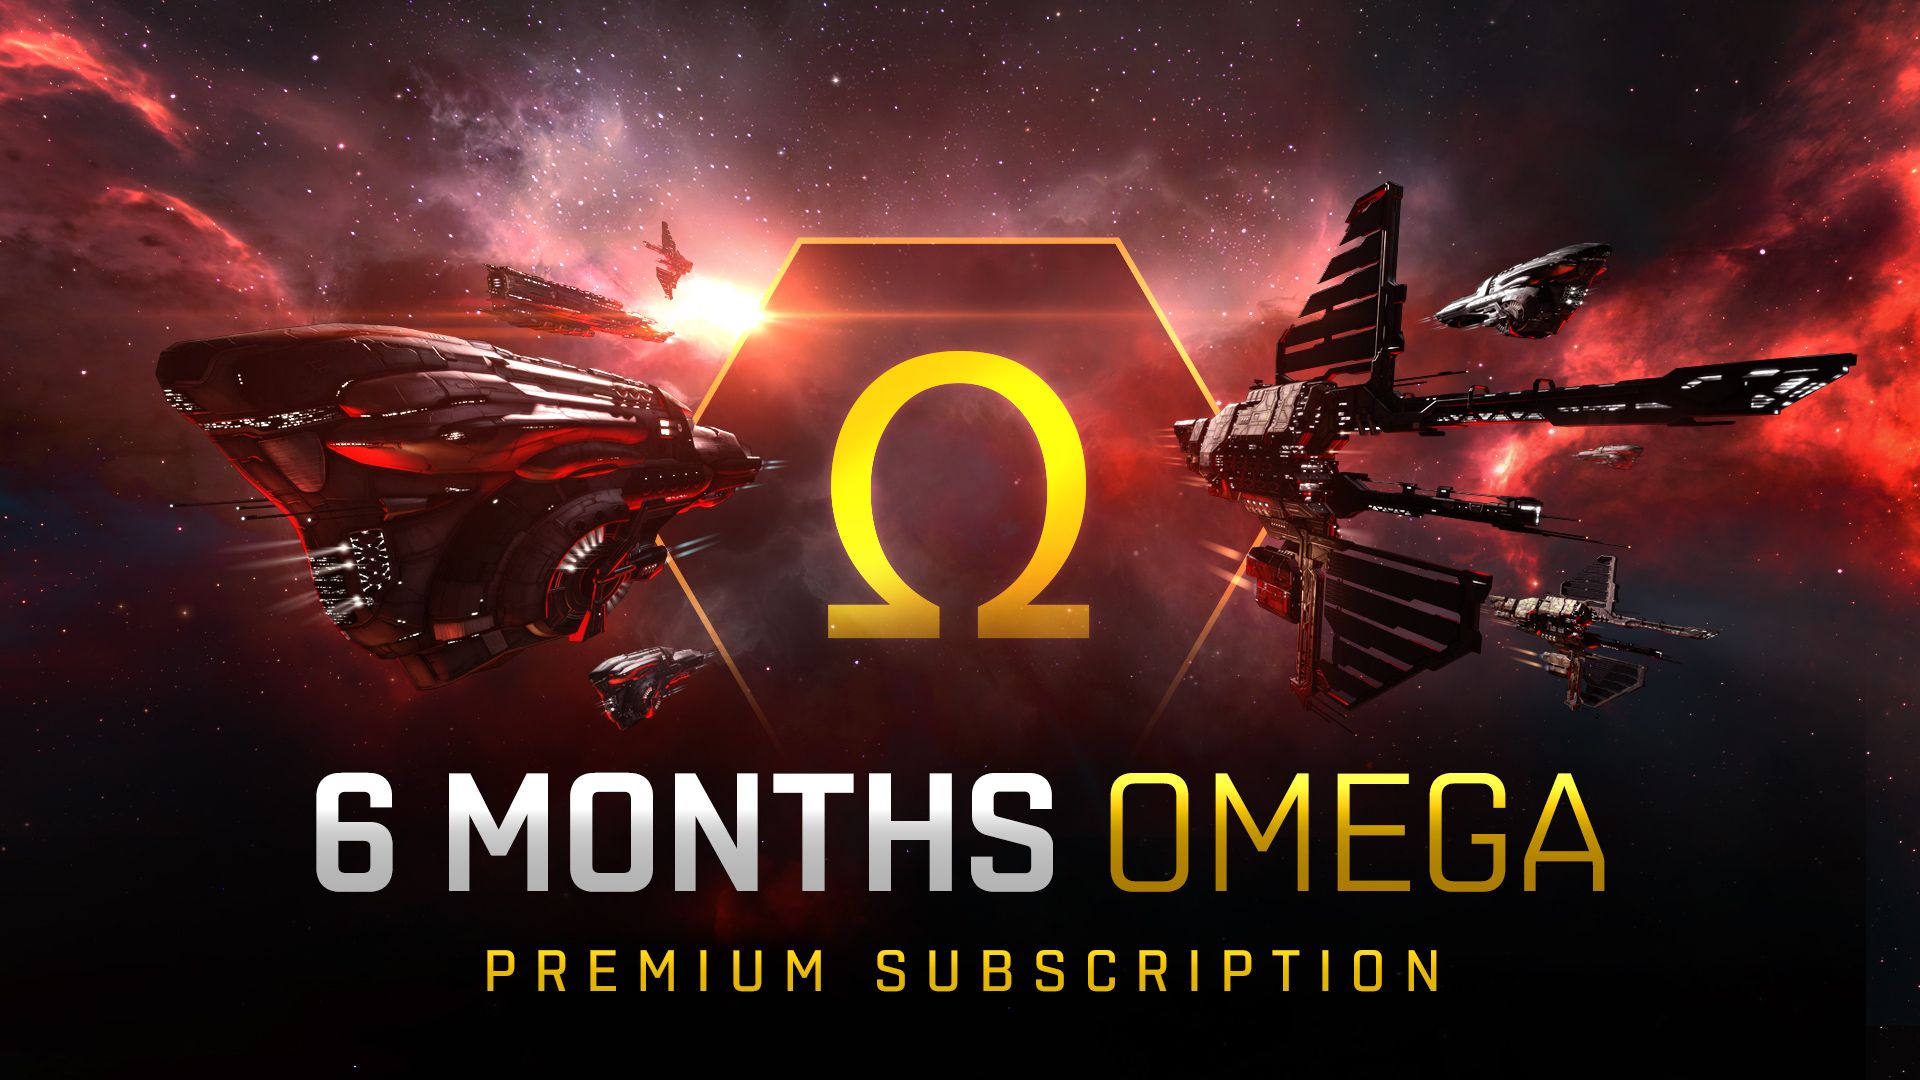 Eve Online 6 Month Omega Time